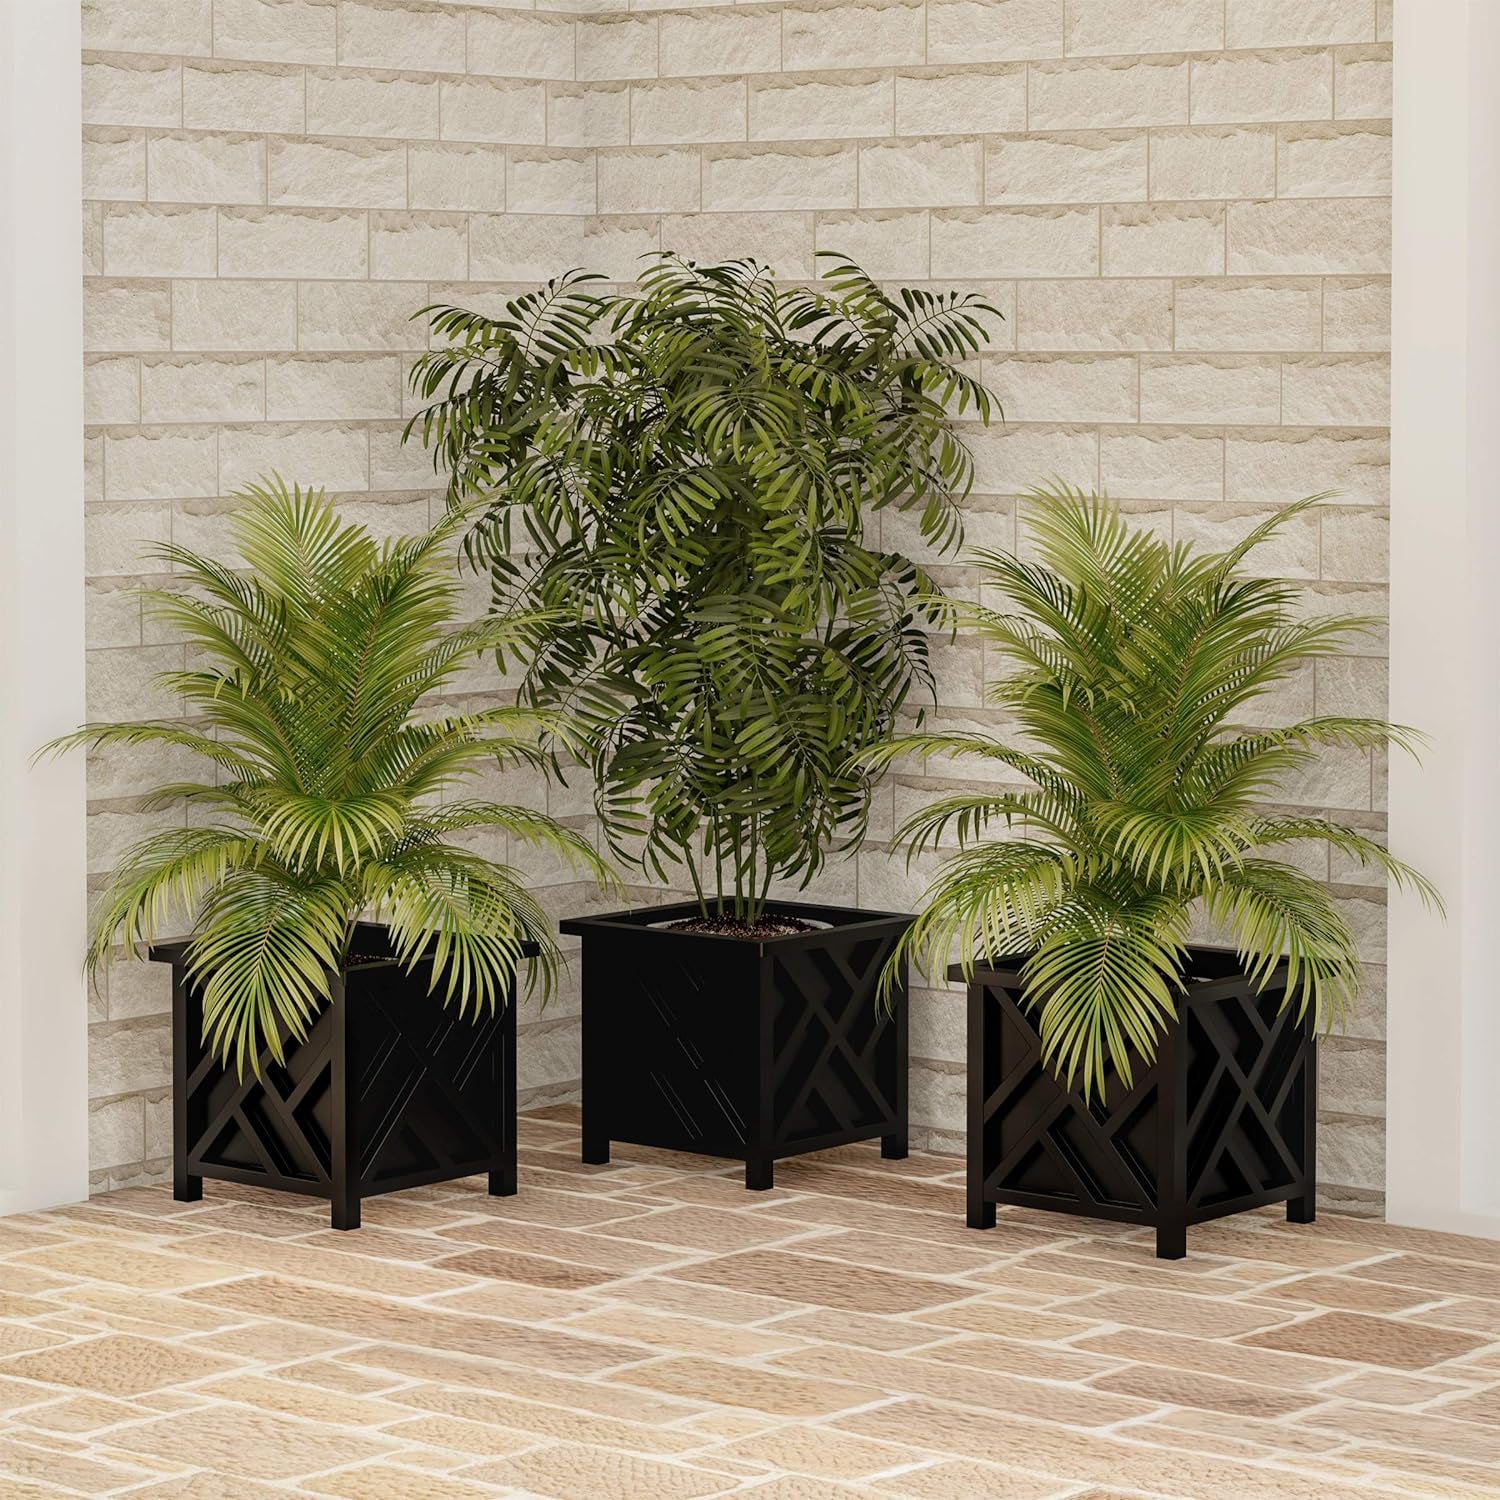 Lattice Design Planter Box – 14.75-Inch-Square Decorative Outdoor Flower or Plant Pot – Front Porch, Patio, and Garden Decor (Black) - Design By Technique